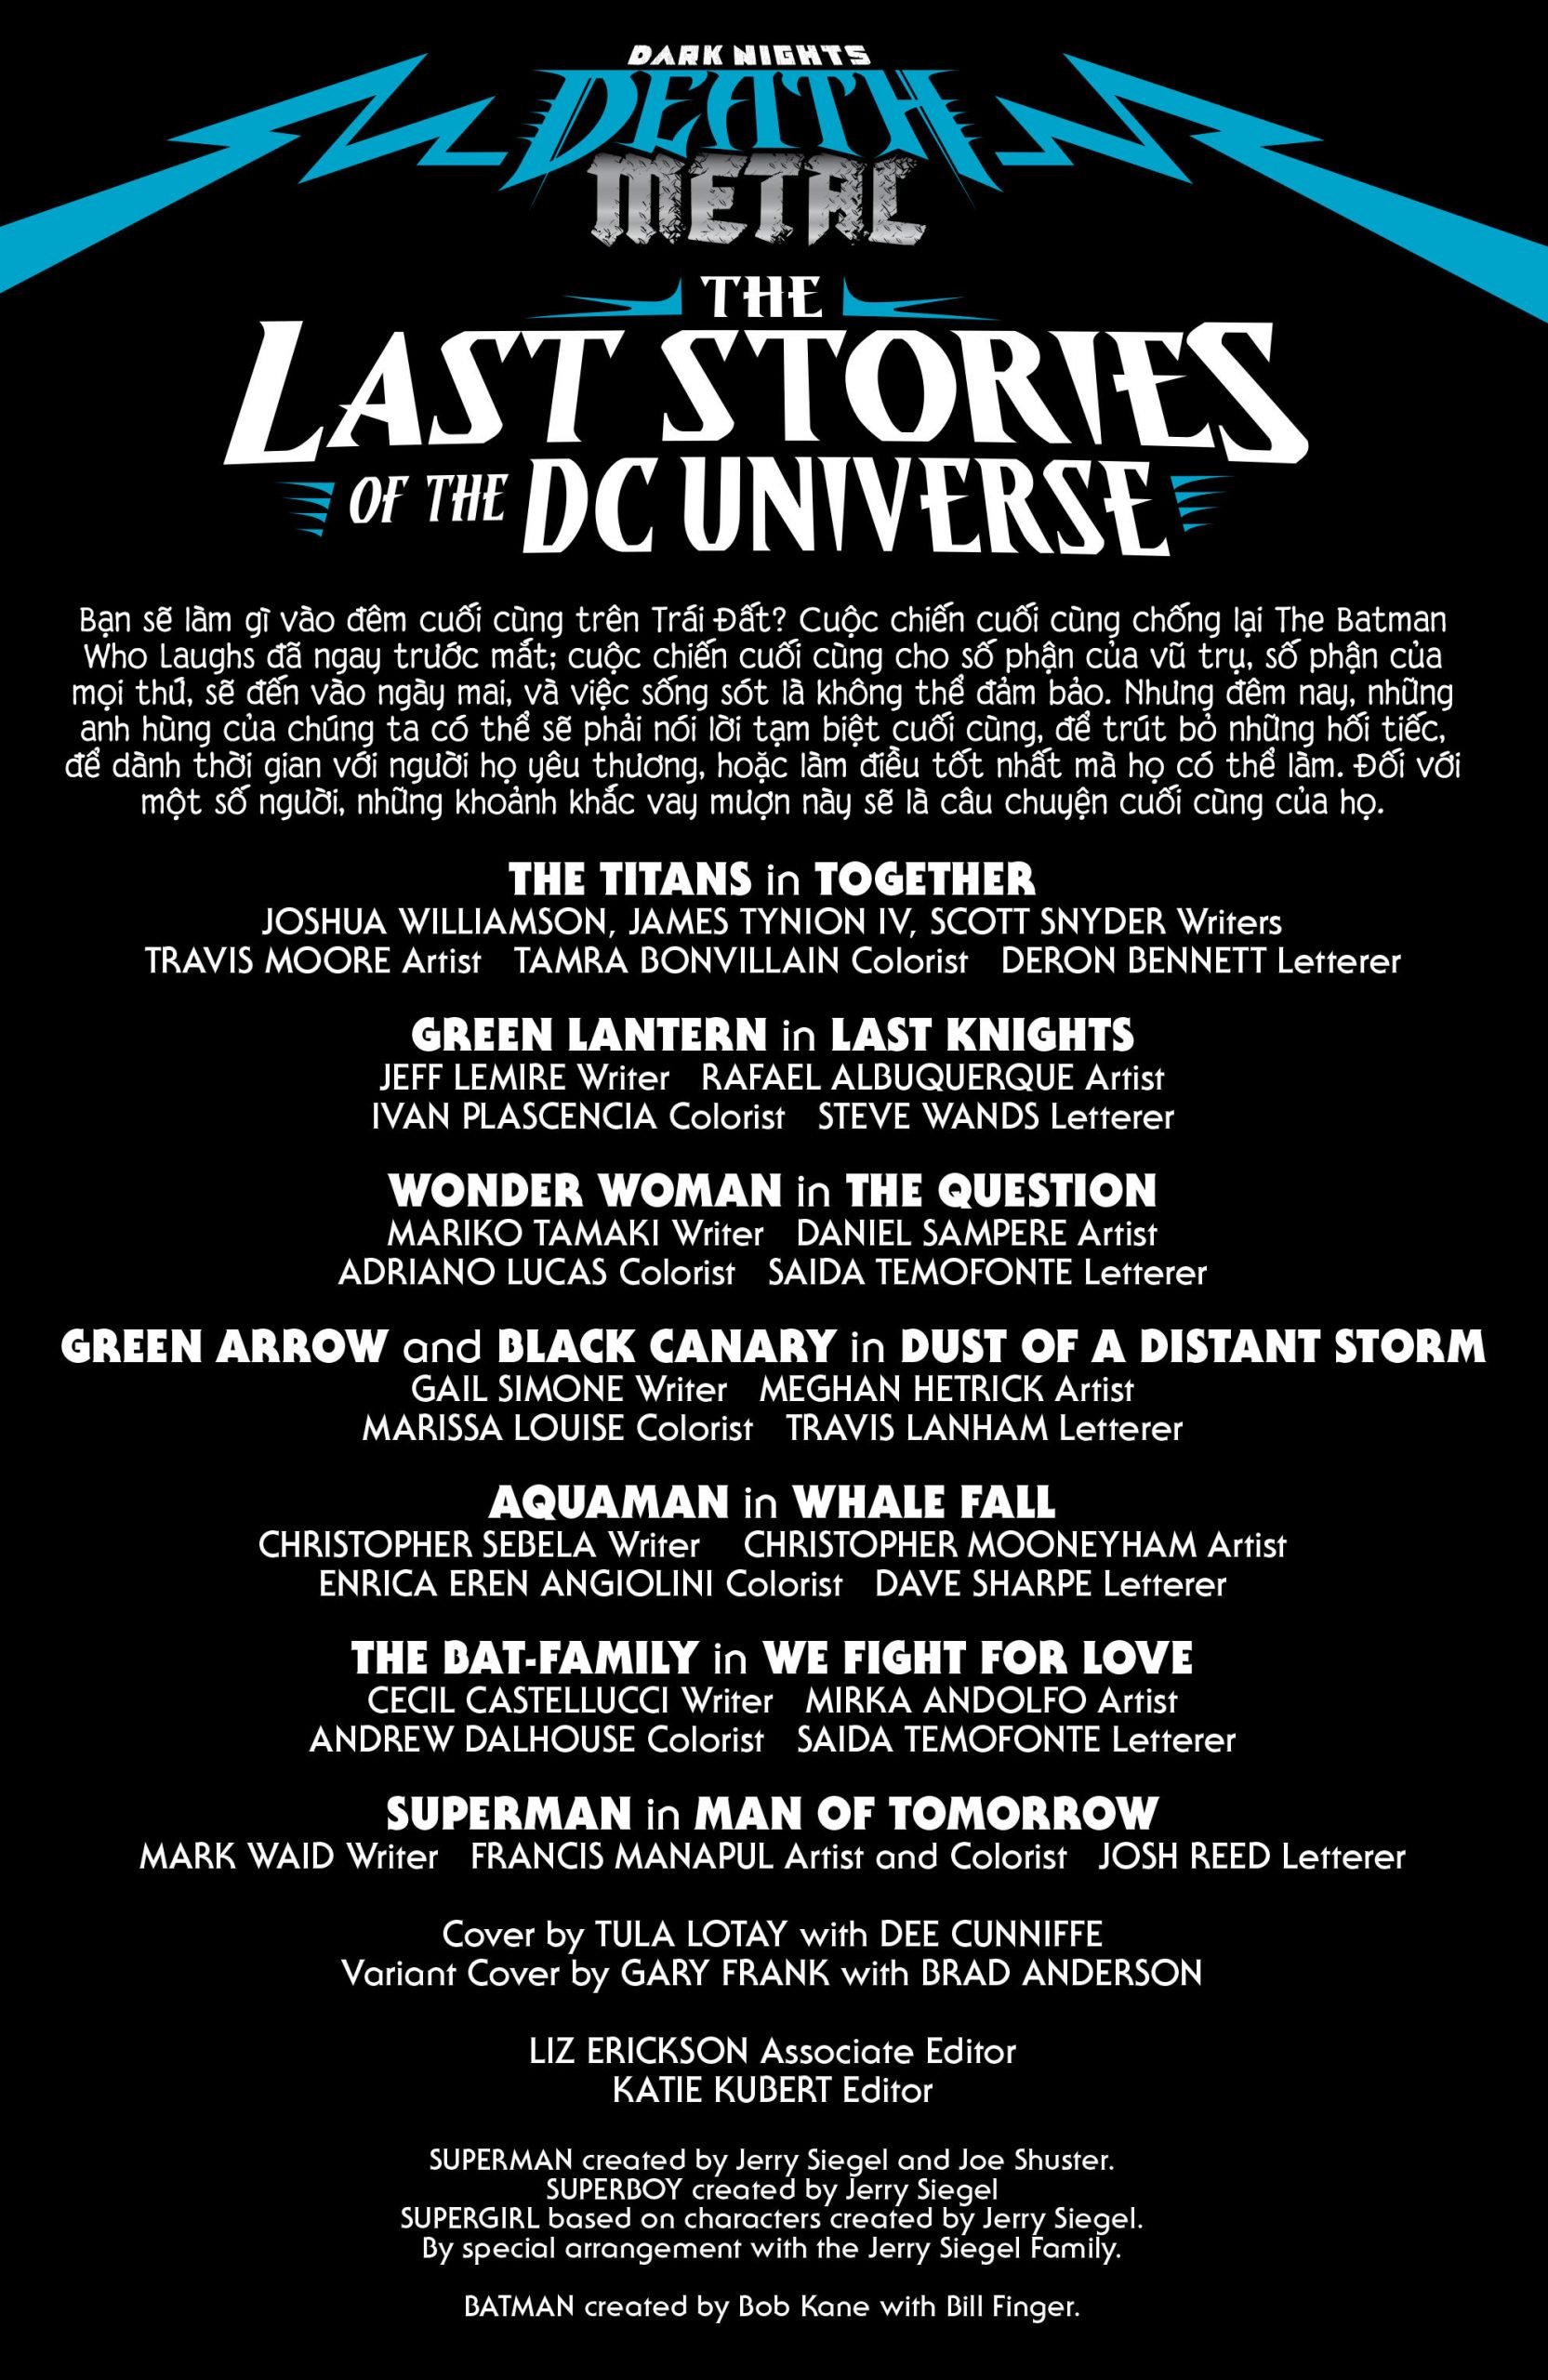 https://langgeek.net/wp-content/webpc-passthru.php?src=https://langgeek.net/wp-content/uploads/2021/10/Dark-Nights-Death-Metal-The-Last-Stories-of-the-DC-Universe-2020-001-002-scaled.jpg&nocache=1